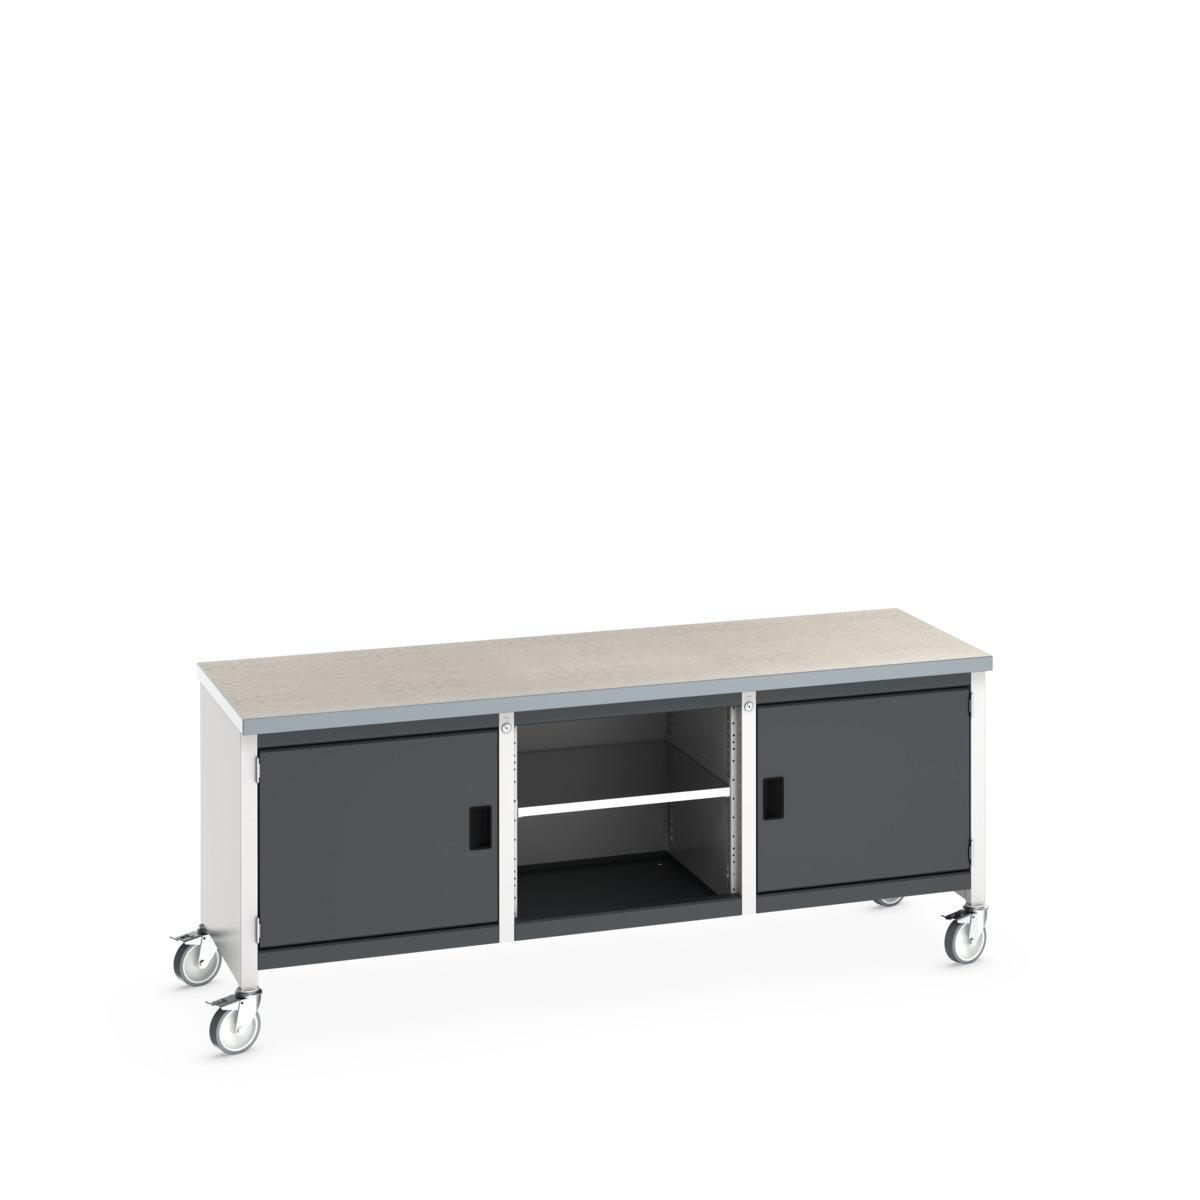 41002120. - cubio mobile storage bench (lino)